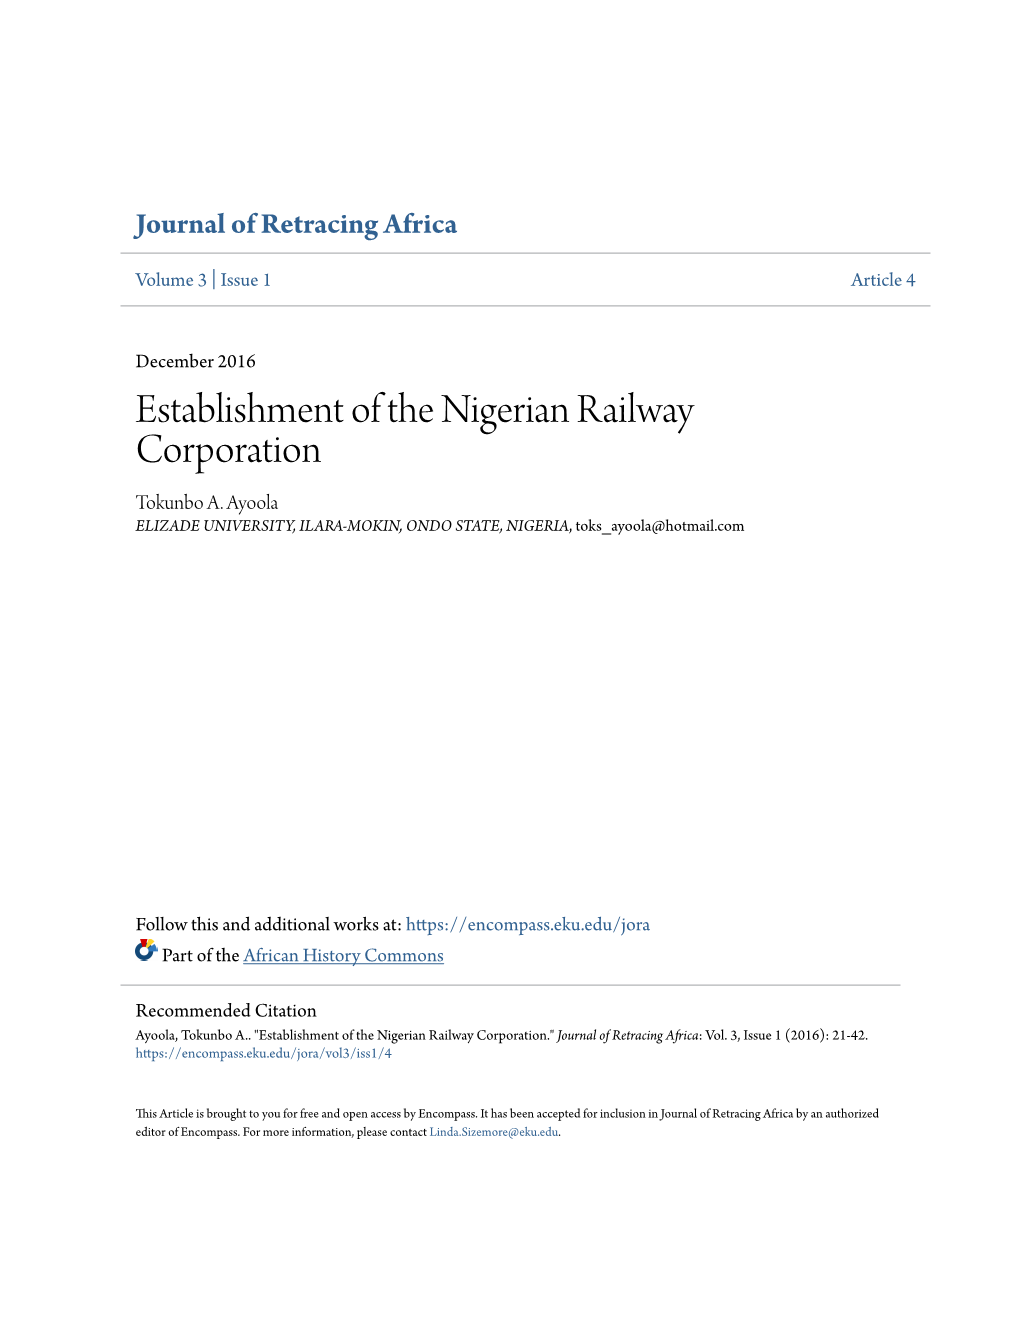 Establishment of the Nigerian Railway Corporation Tokunbo A